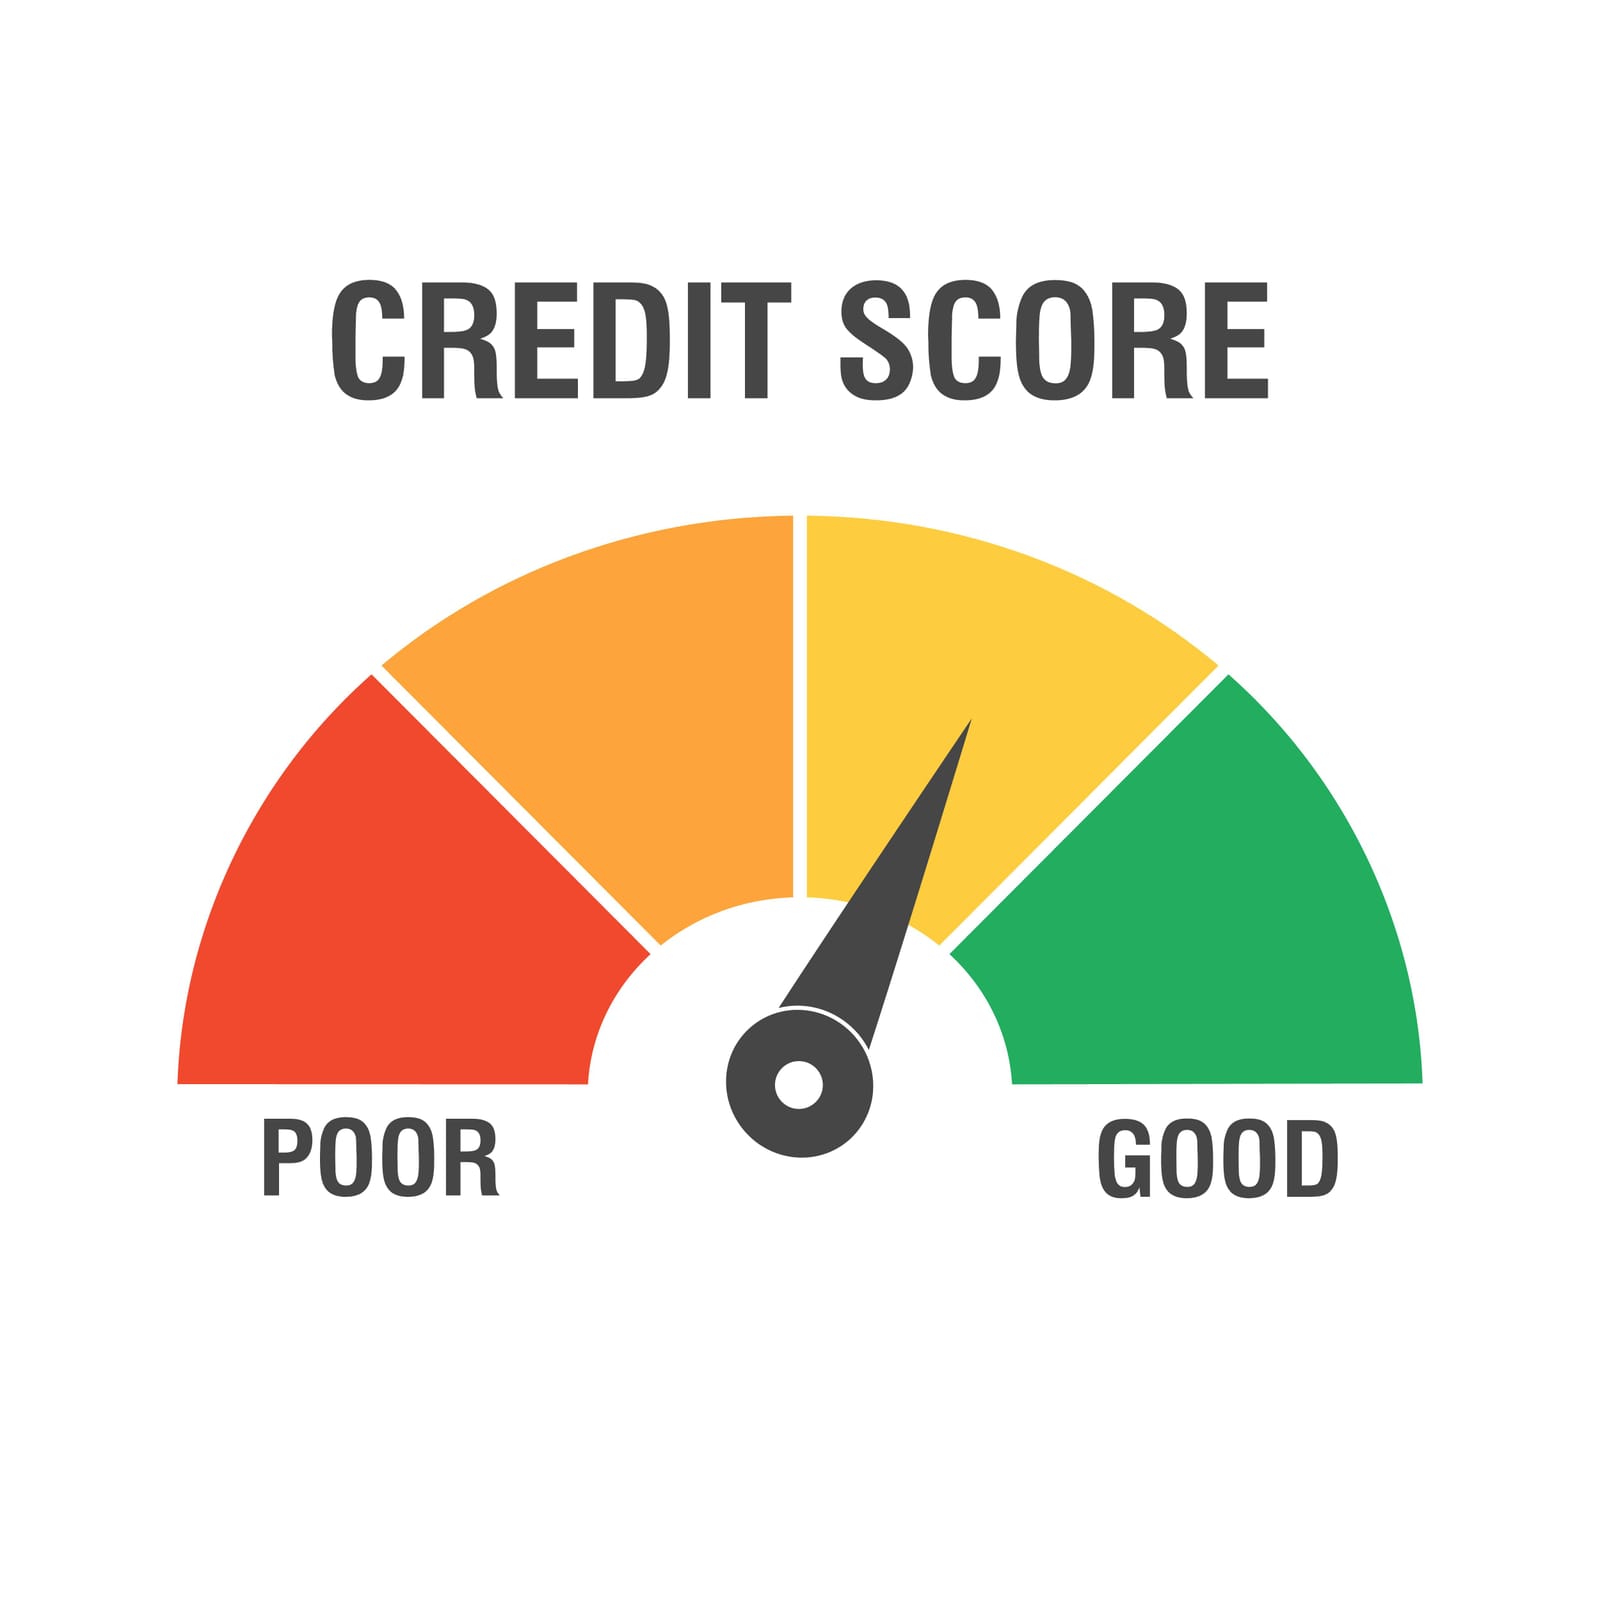 Credit score gage